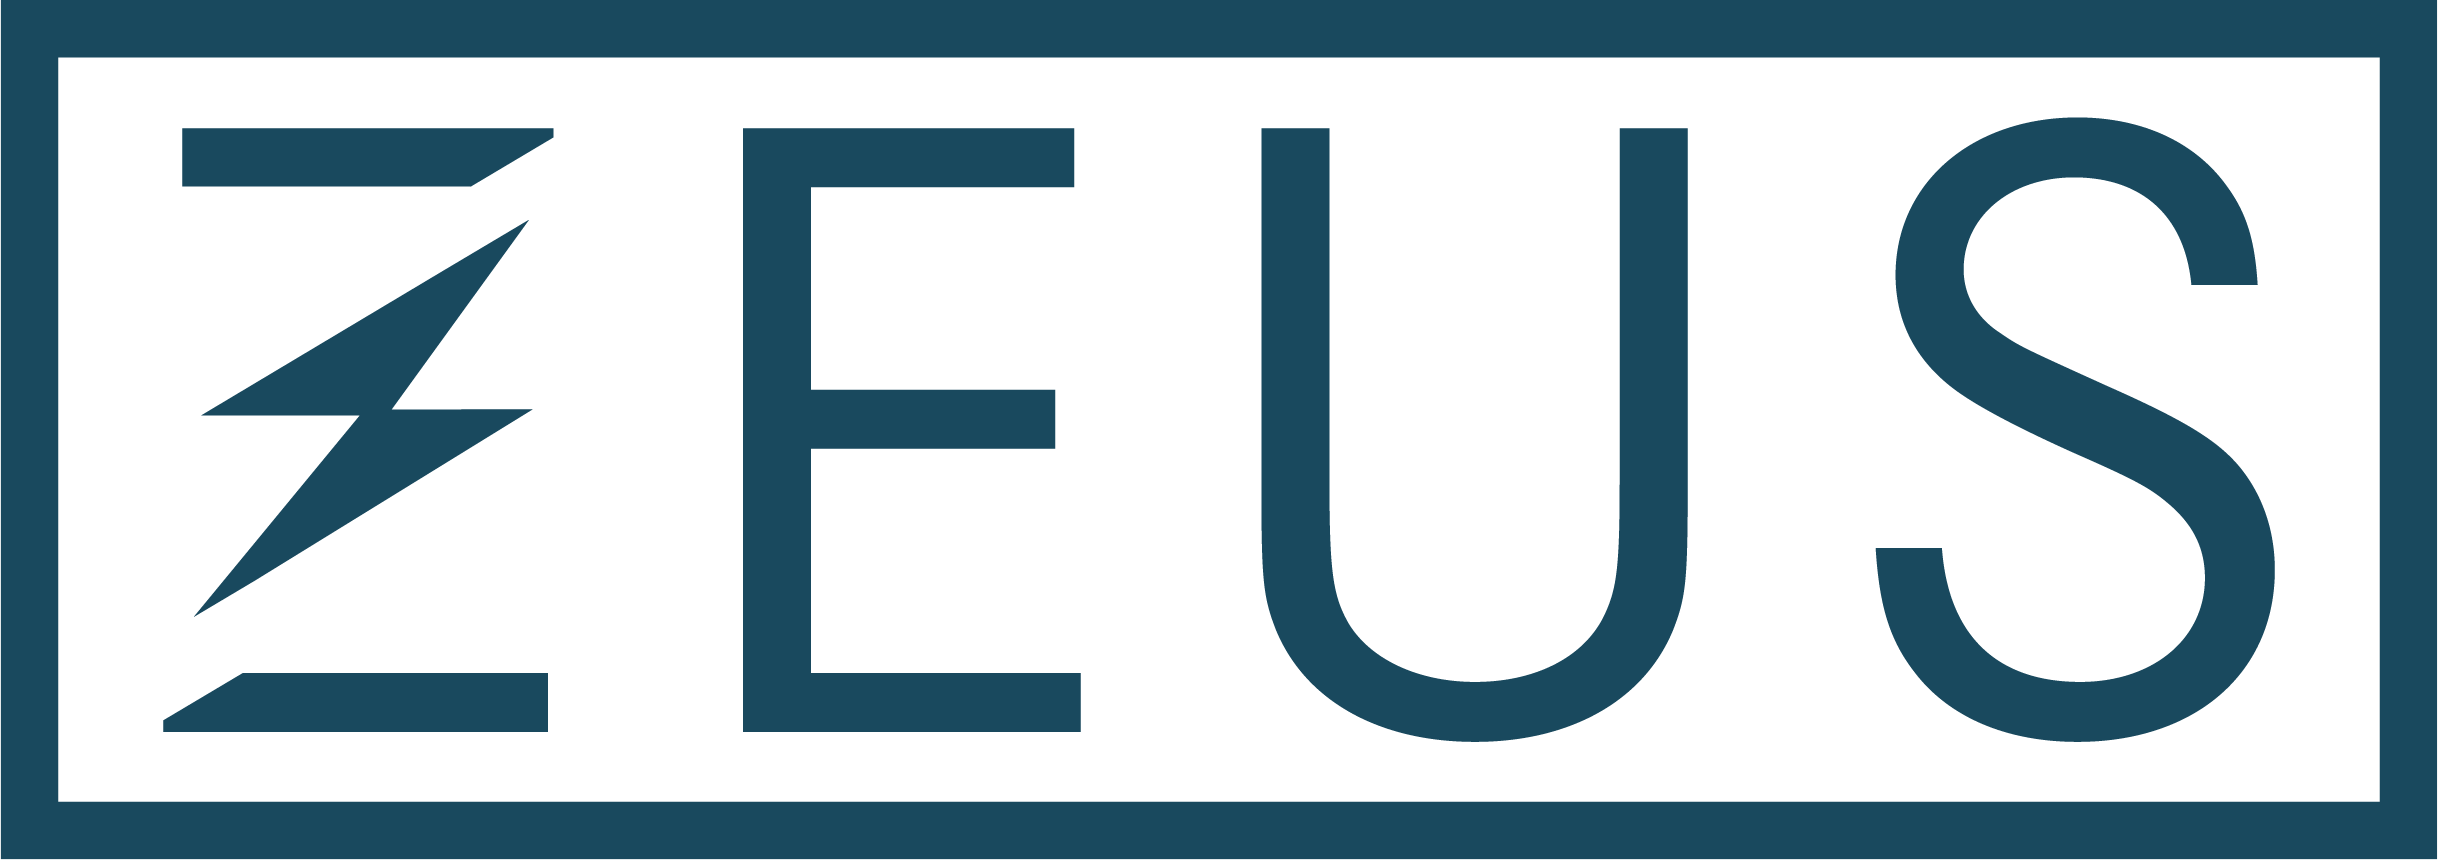 ZEUS project logo